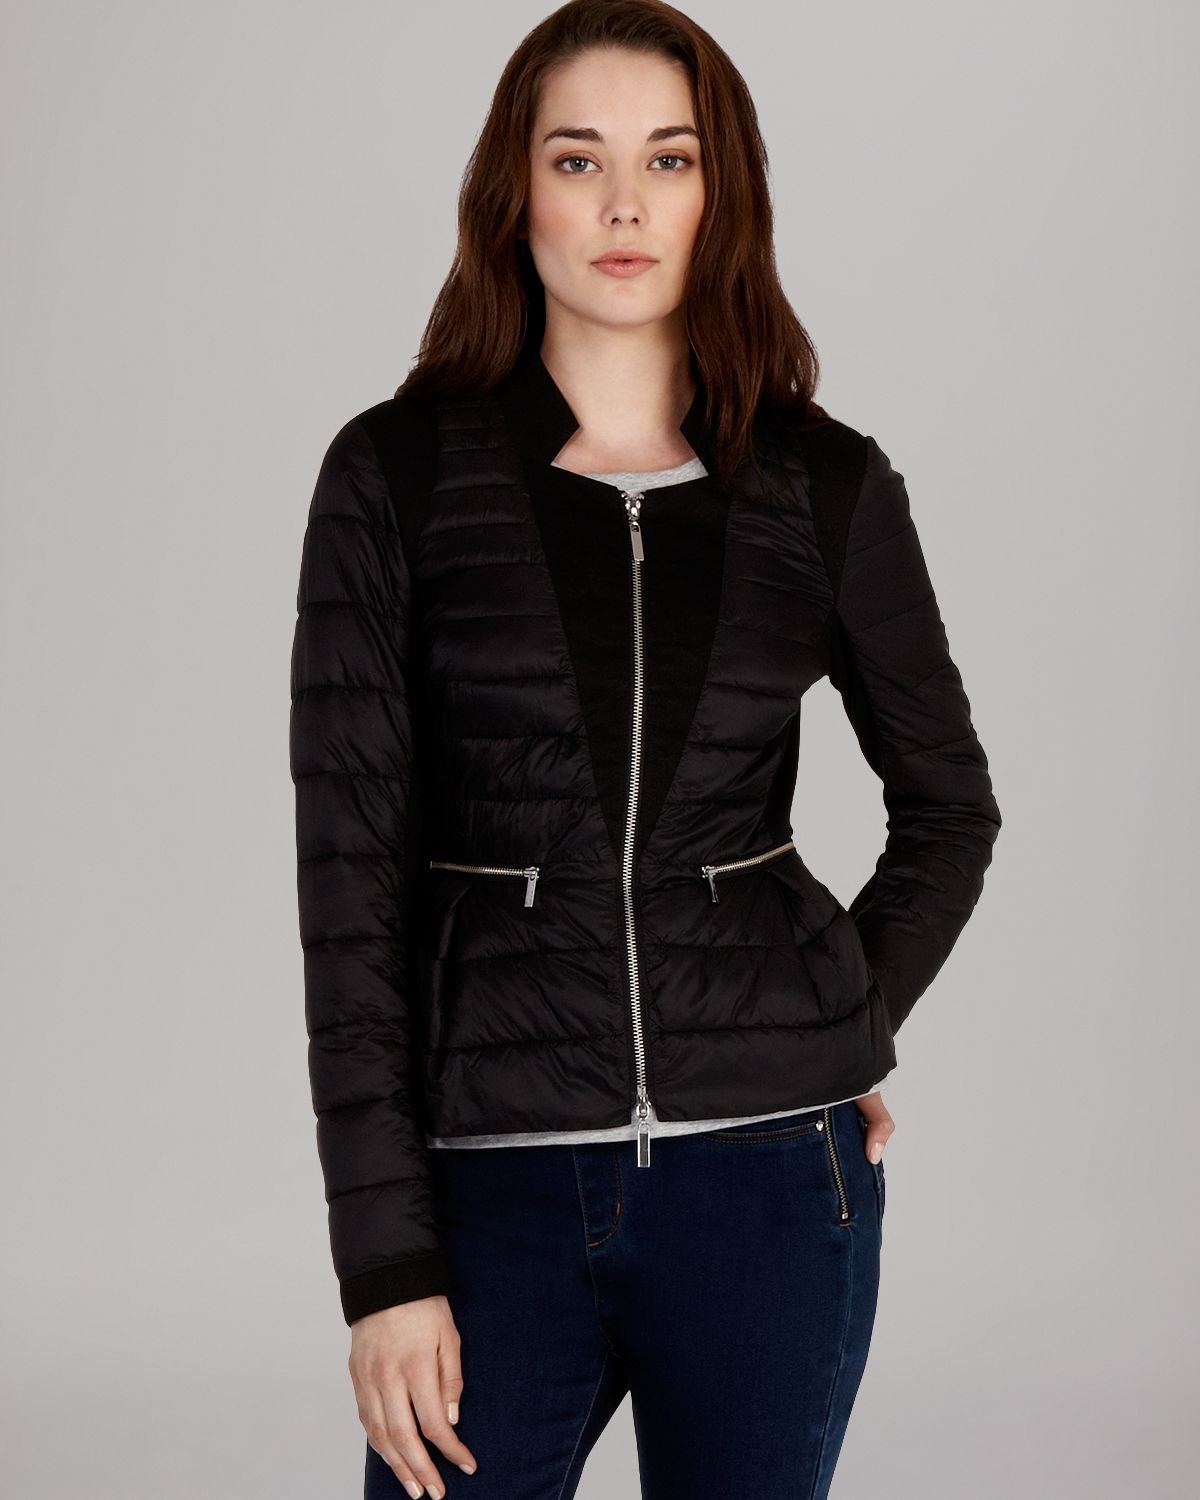 Lyst - Karen Millen Jacket Lightweight Peplum Puffer in Black